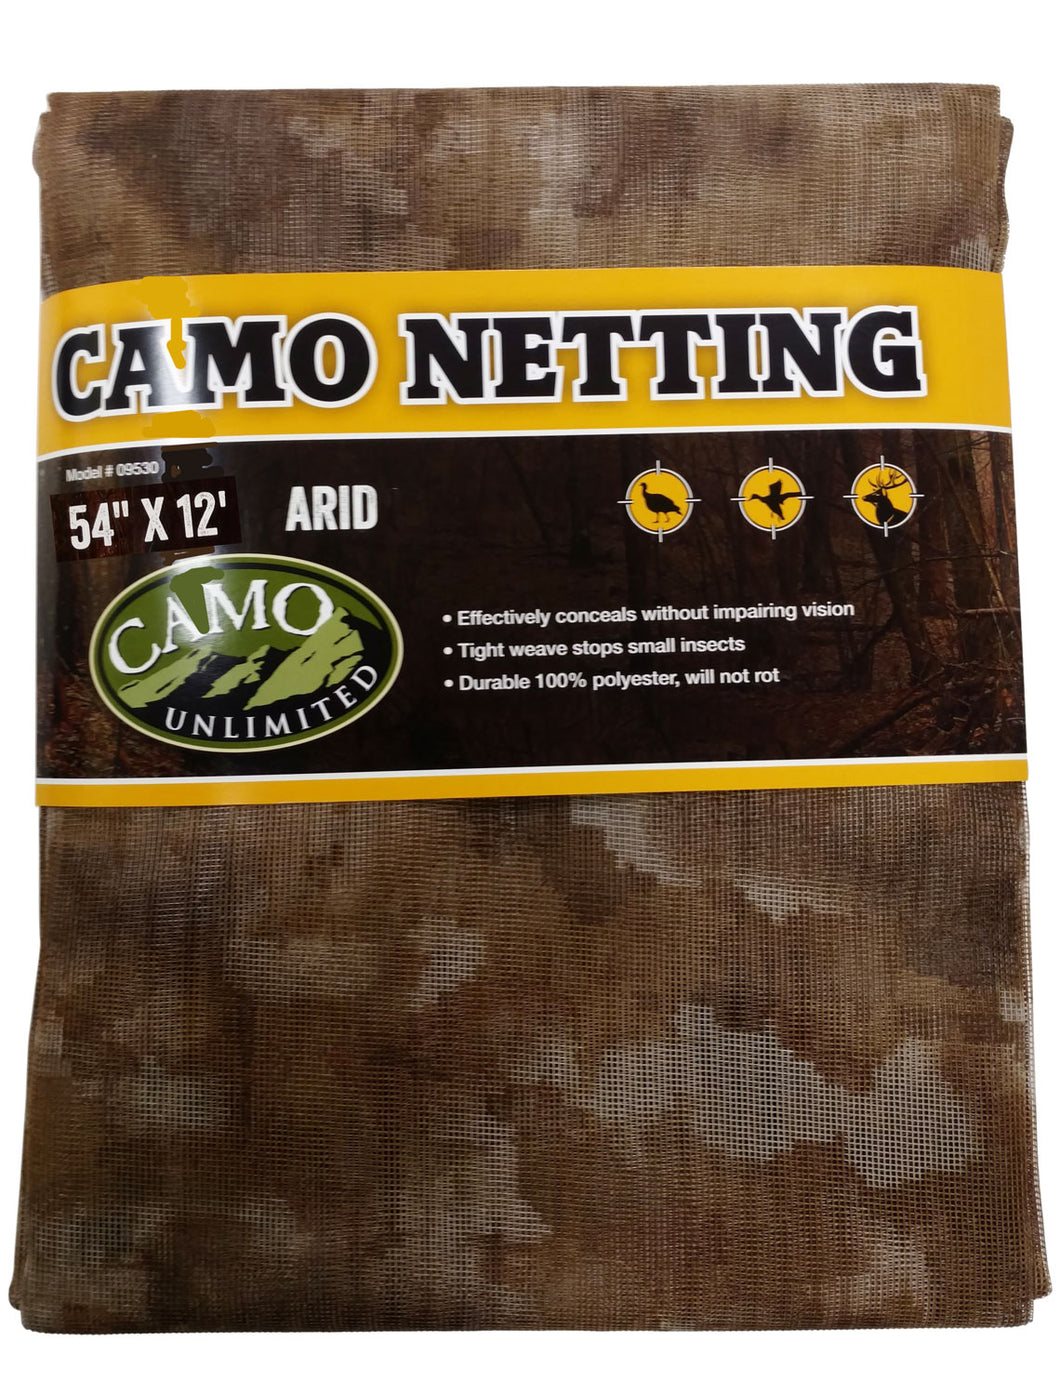 Camo Netting 54